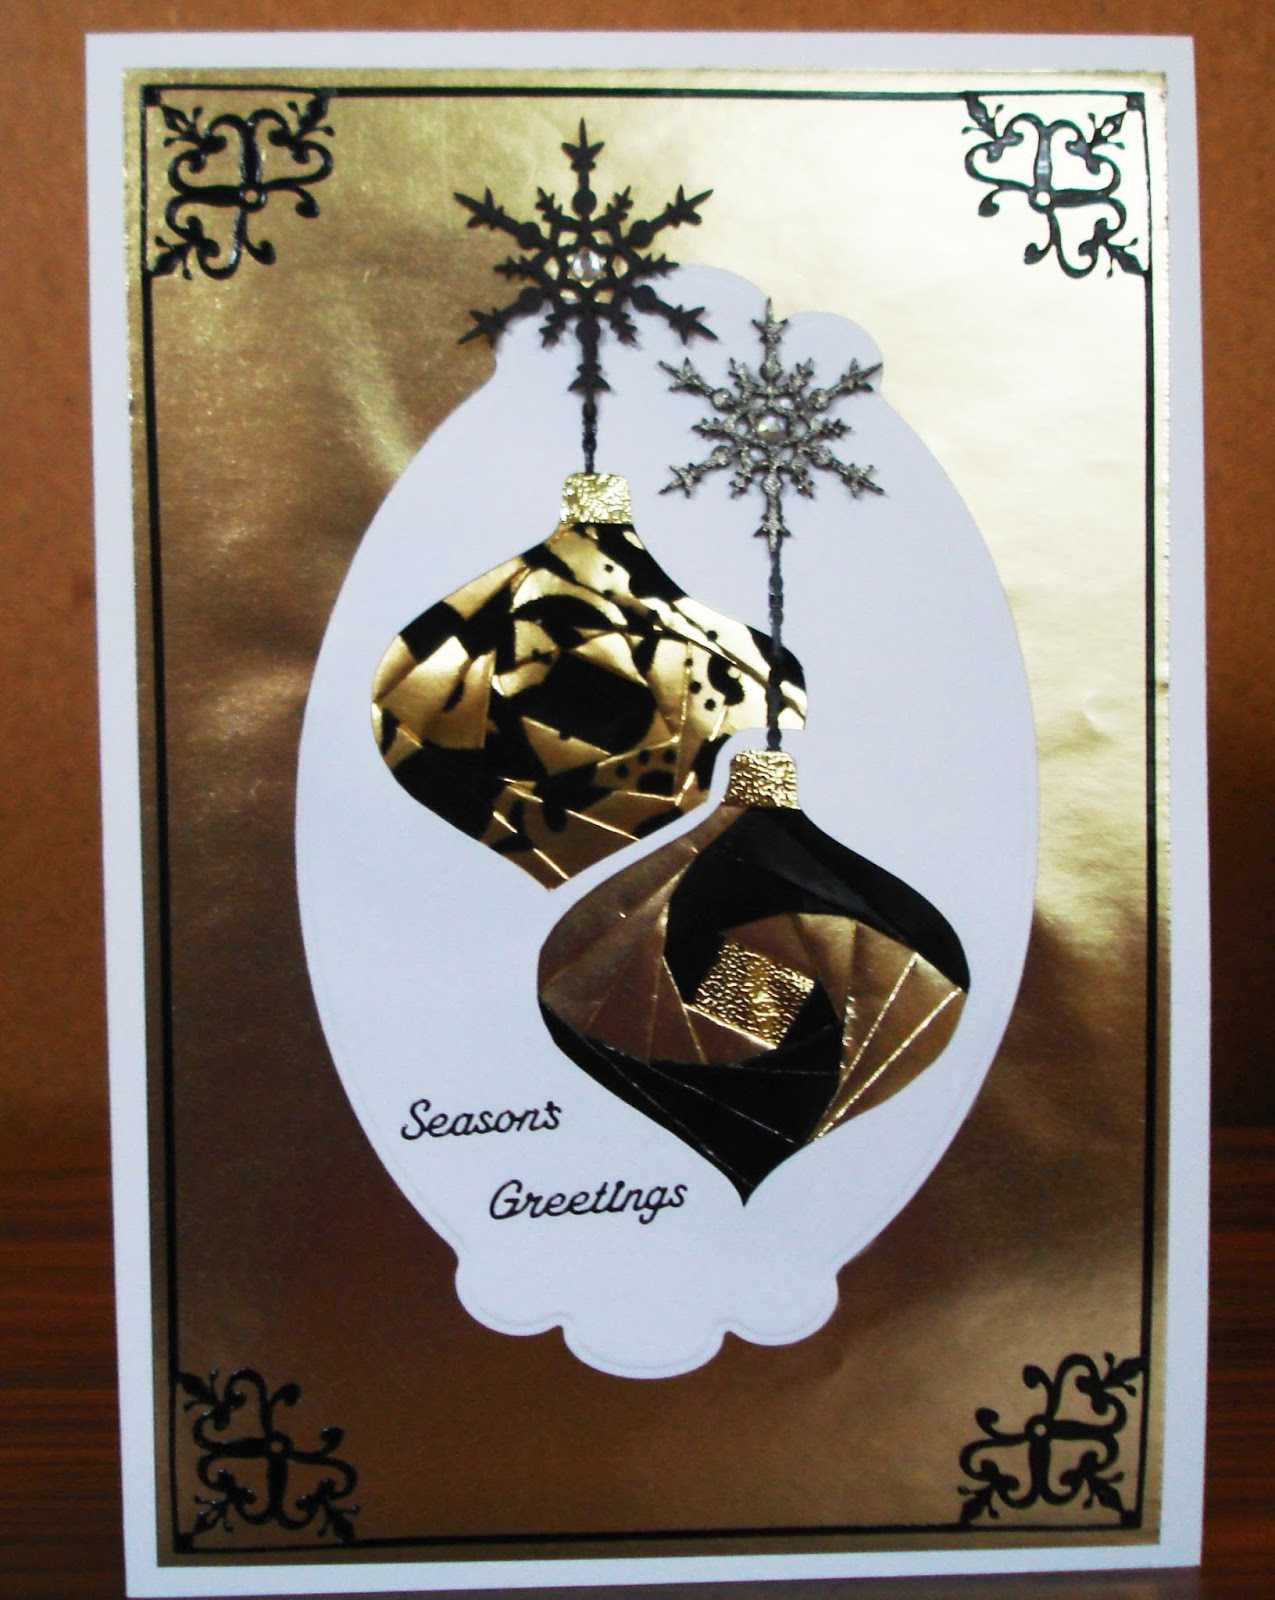 Lorraine Lives Here: Iris Folding Christmas Cards Throughout Iris Folding Christmas Cards Templates